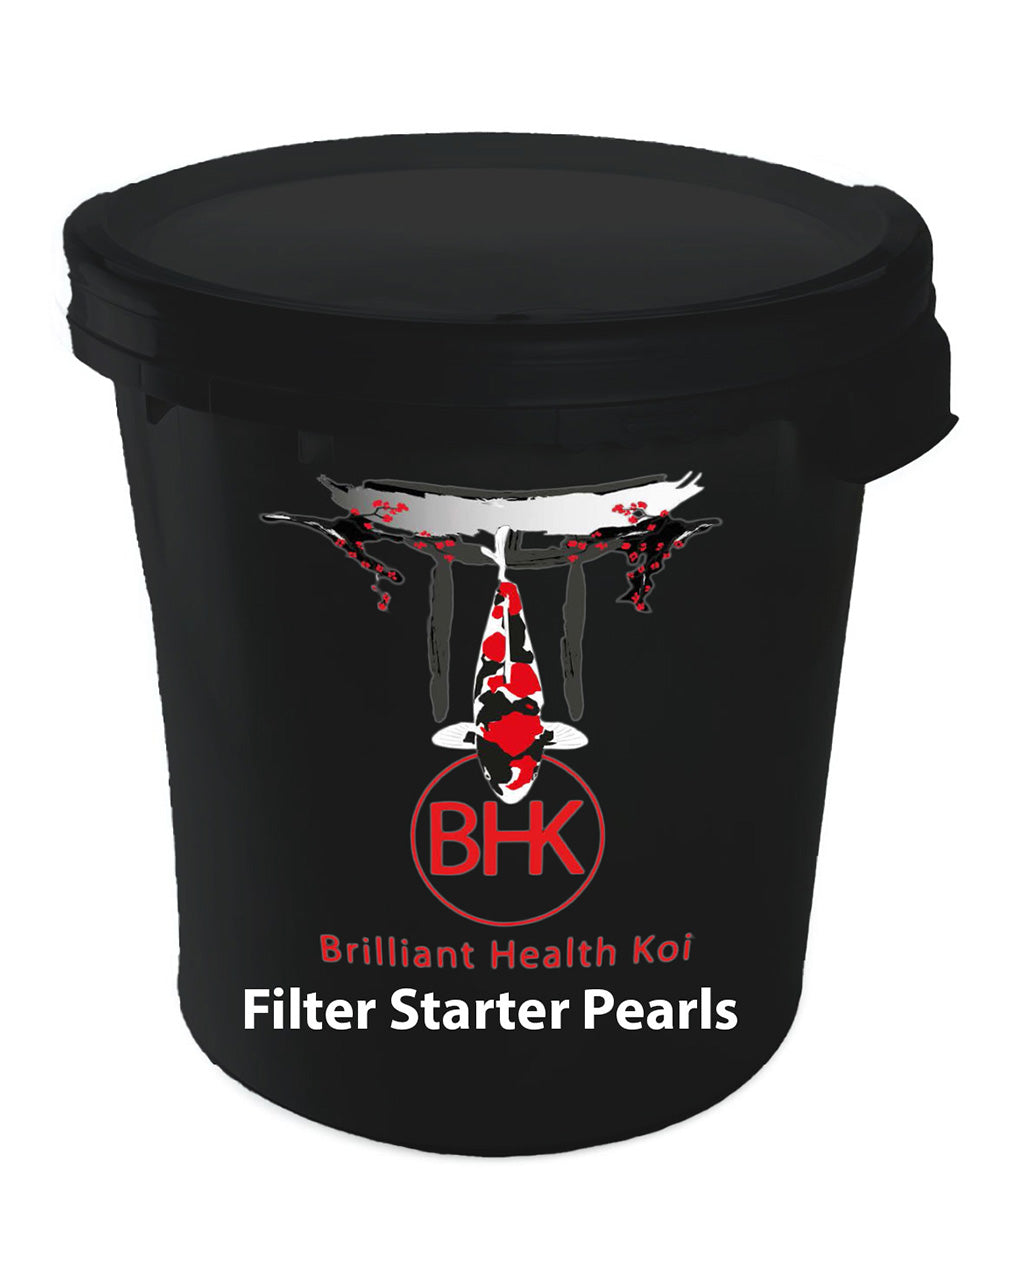 BHK Filter Starter Pearls